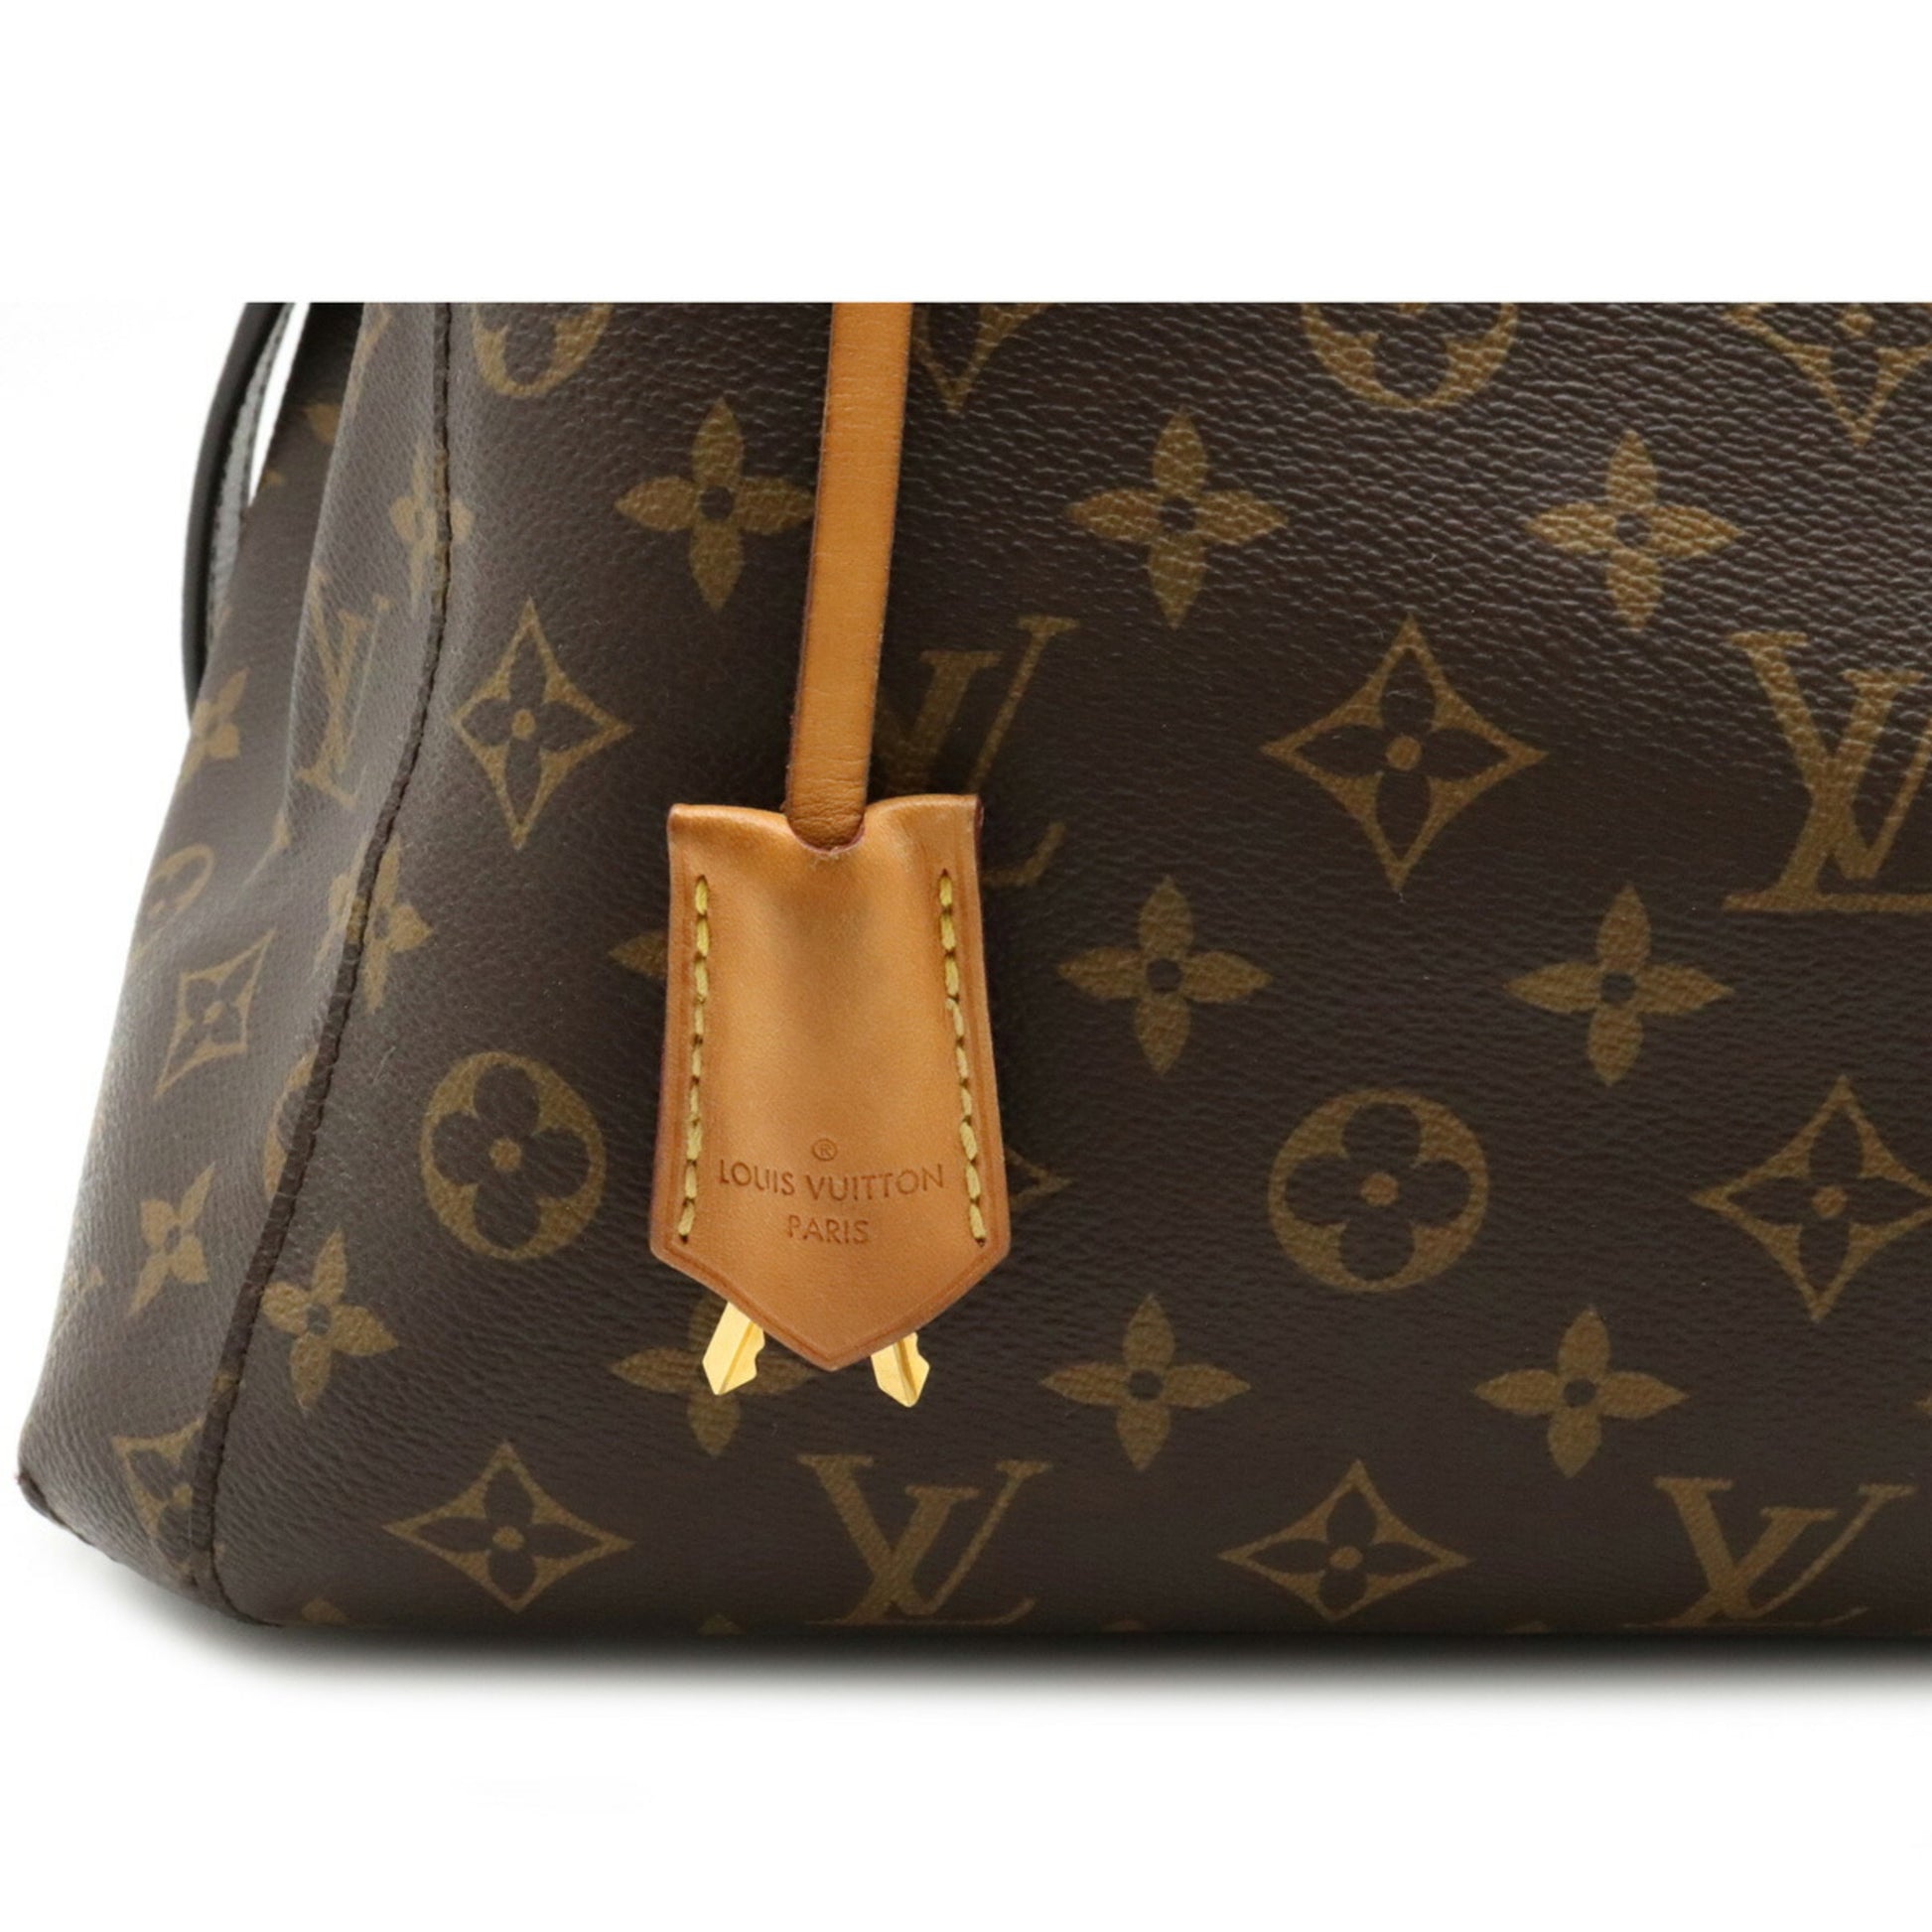 LOUIS VUITTON M41056 Handbag Montaigne MM Monogram W/ box